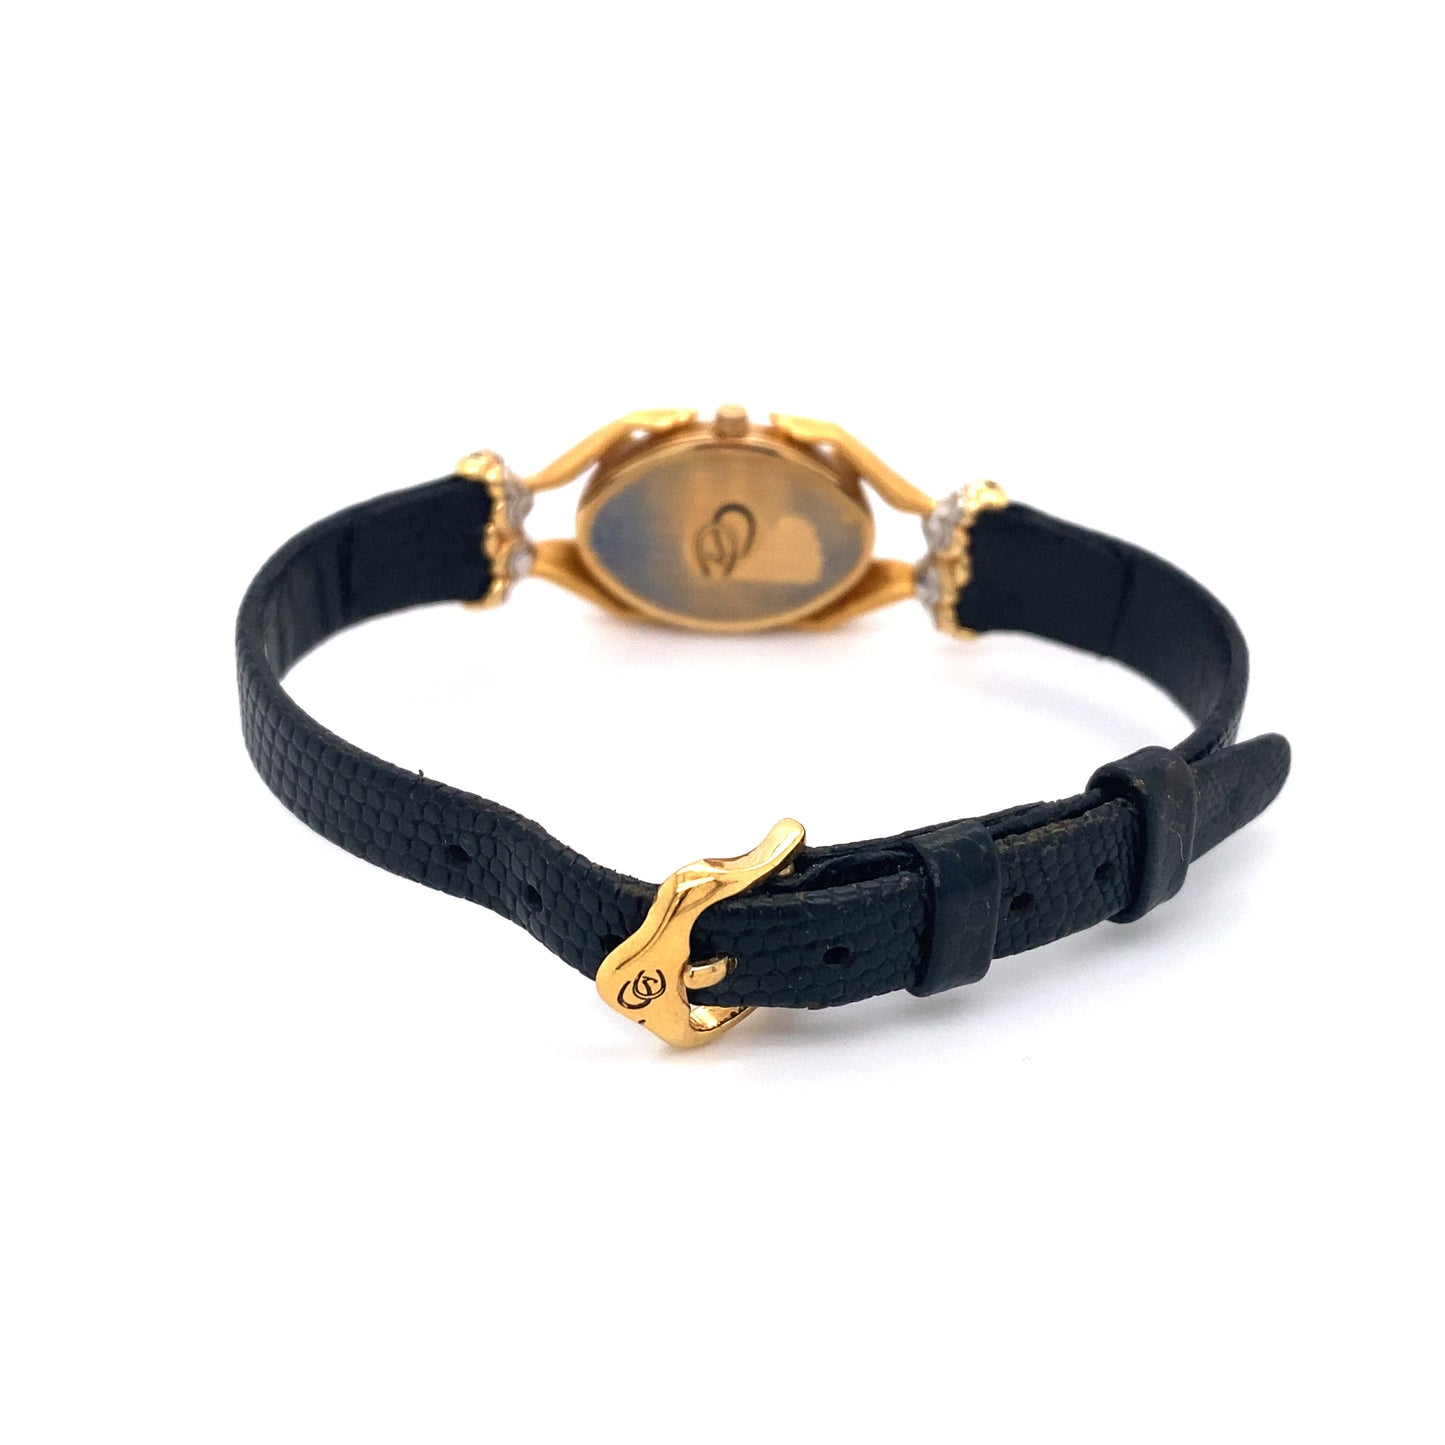 Carrera y Carrera Womens Wrist Watch with Lizard Band in 18K Gold